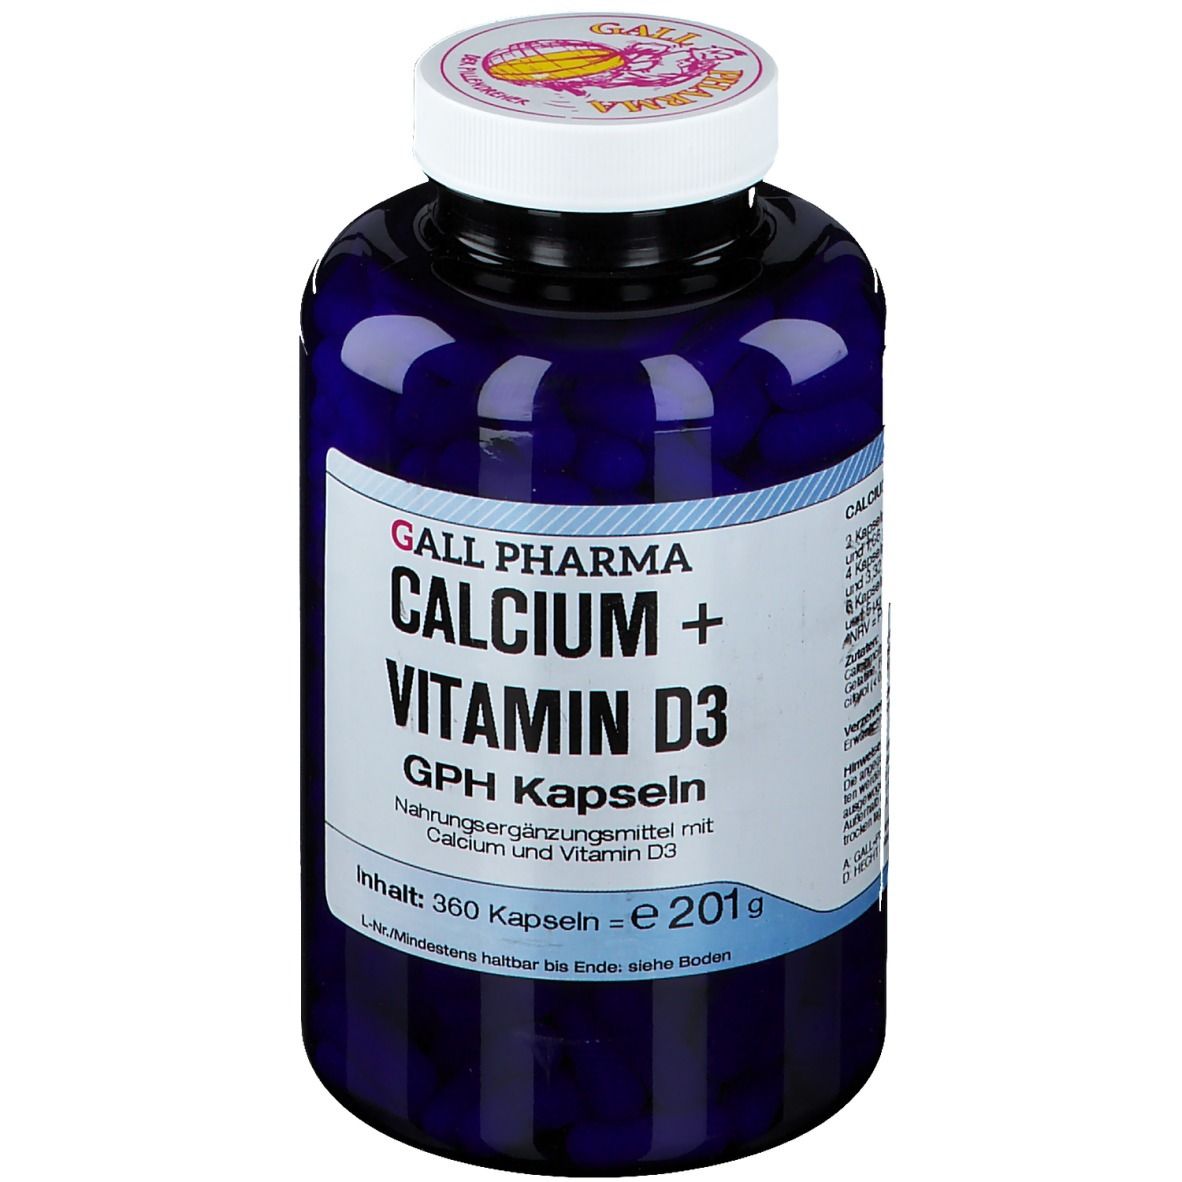 GALL PHARMA Calcium + Vitamin D3 GPH